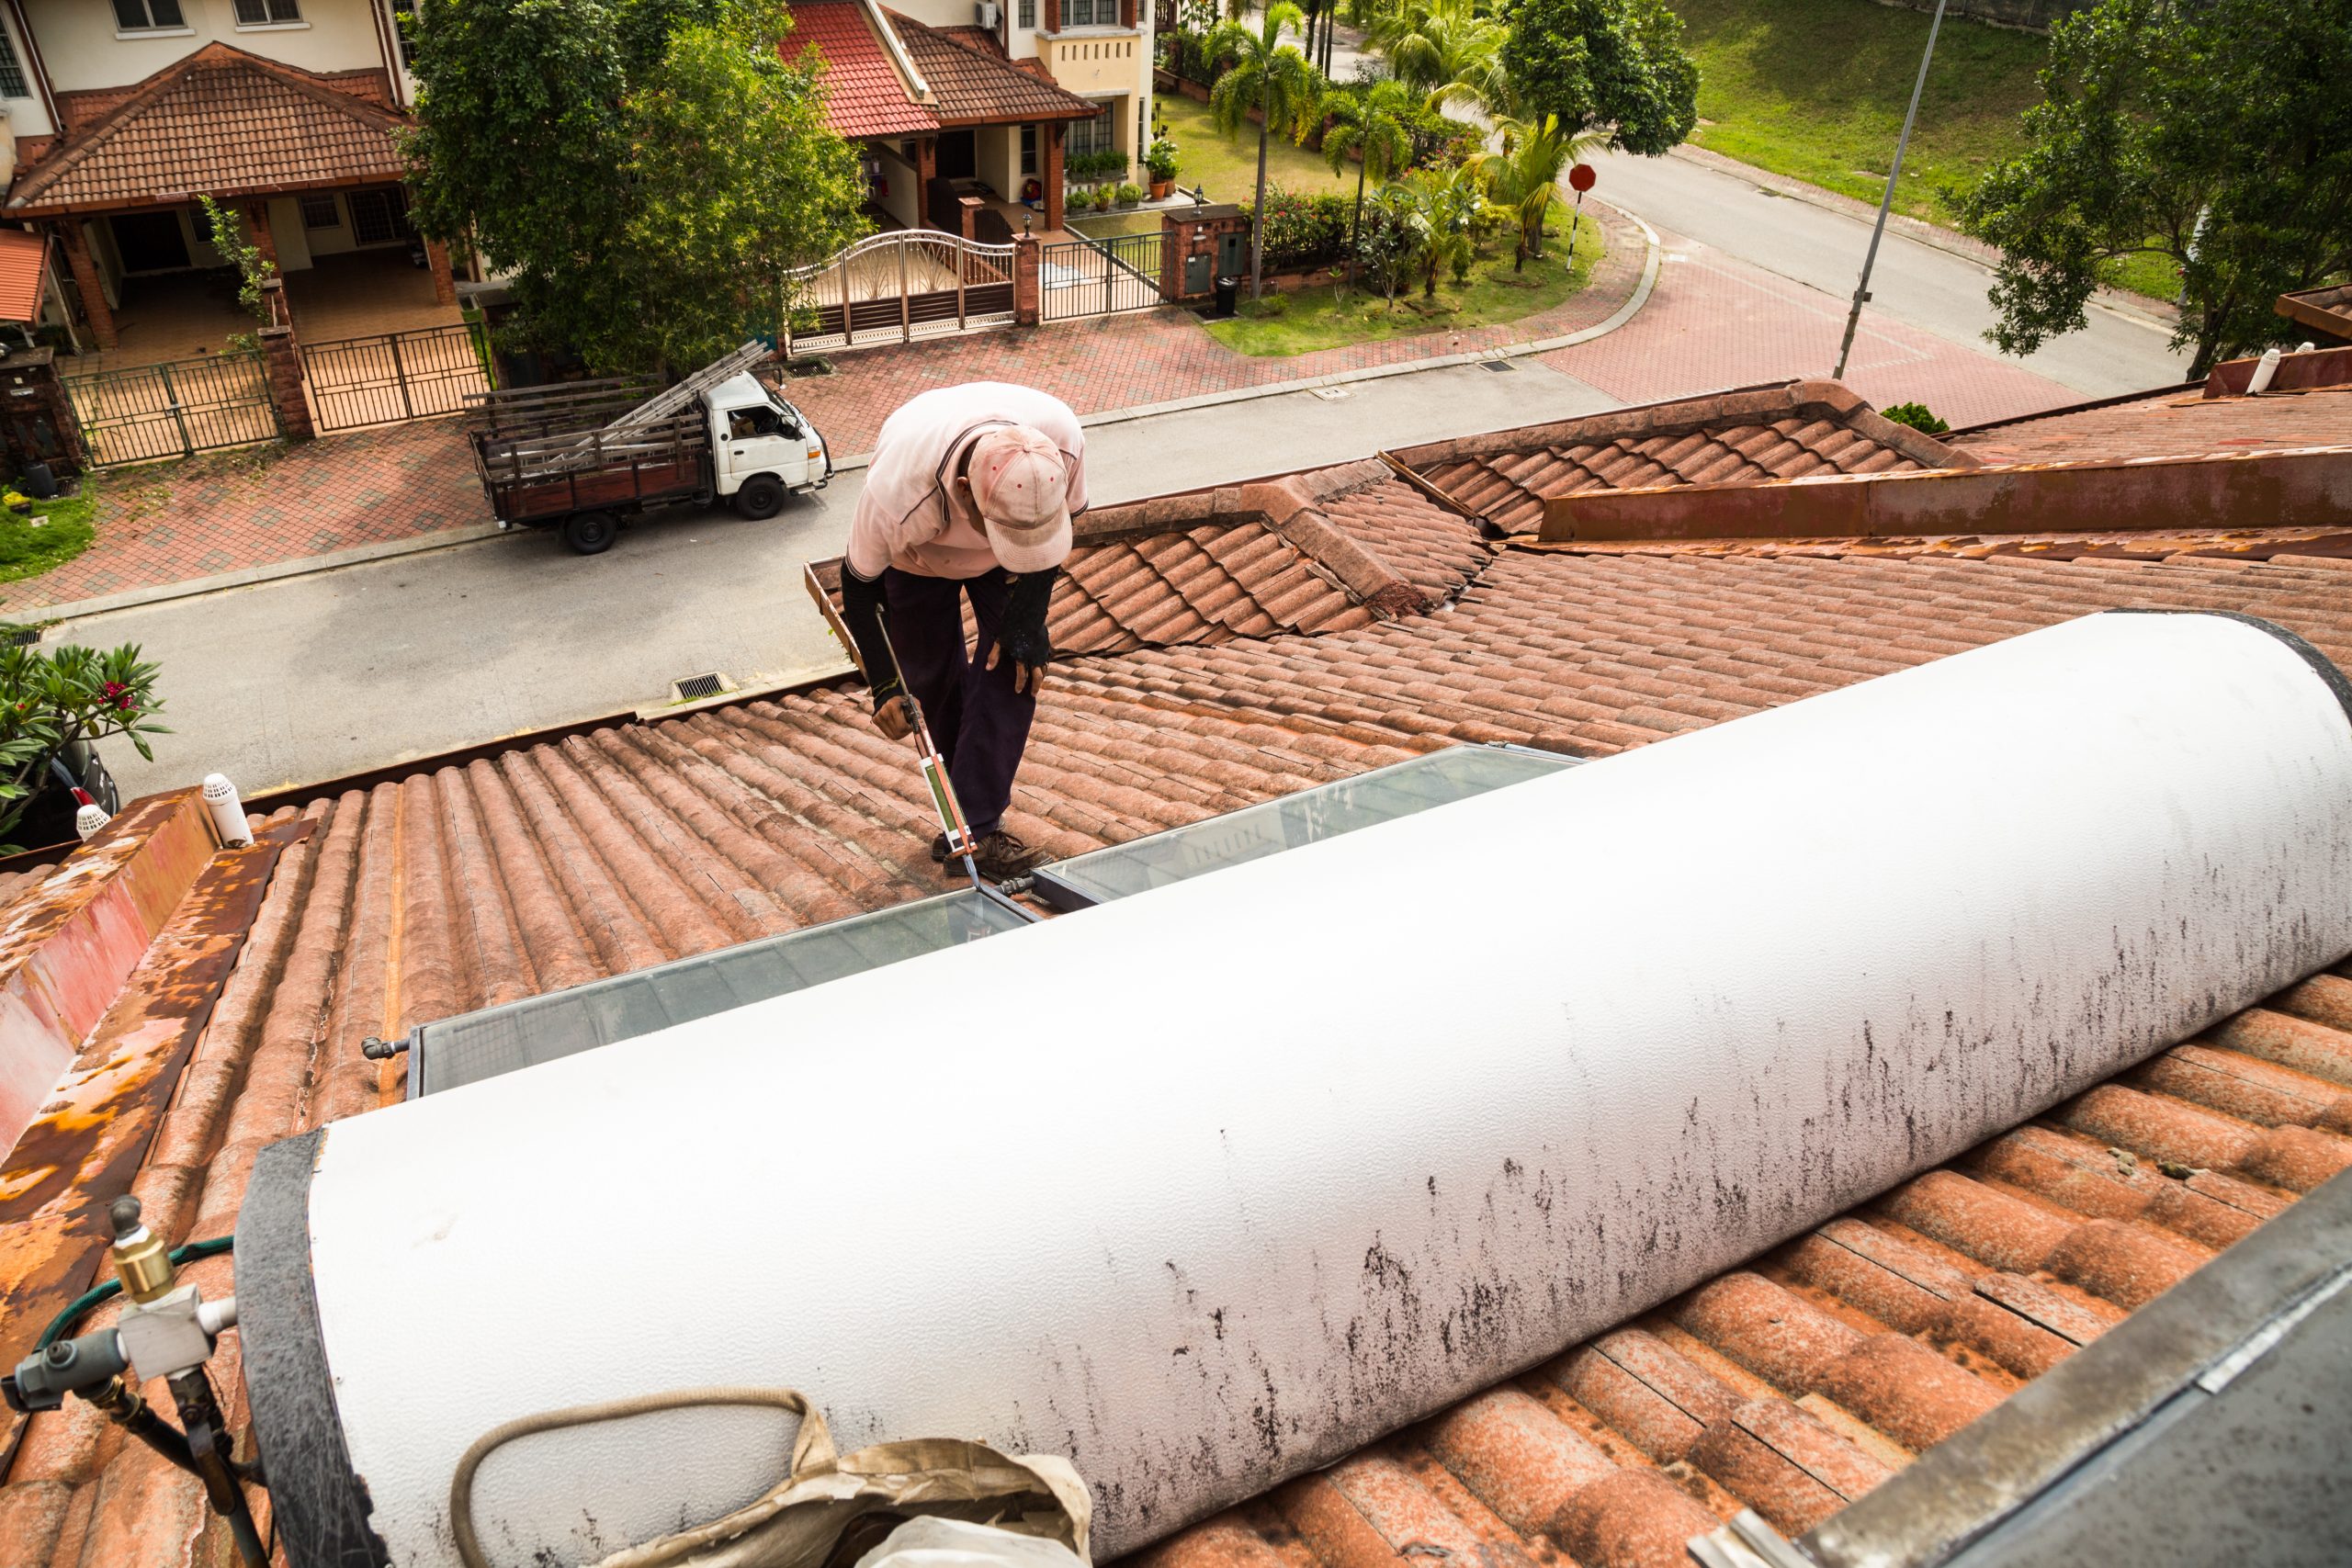 Solar Hot Water Repair Perth on roof Perth Plumbing and Gasfitting